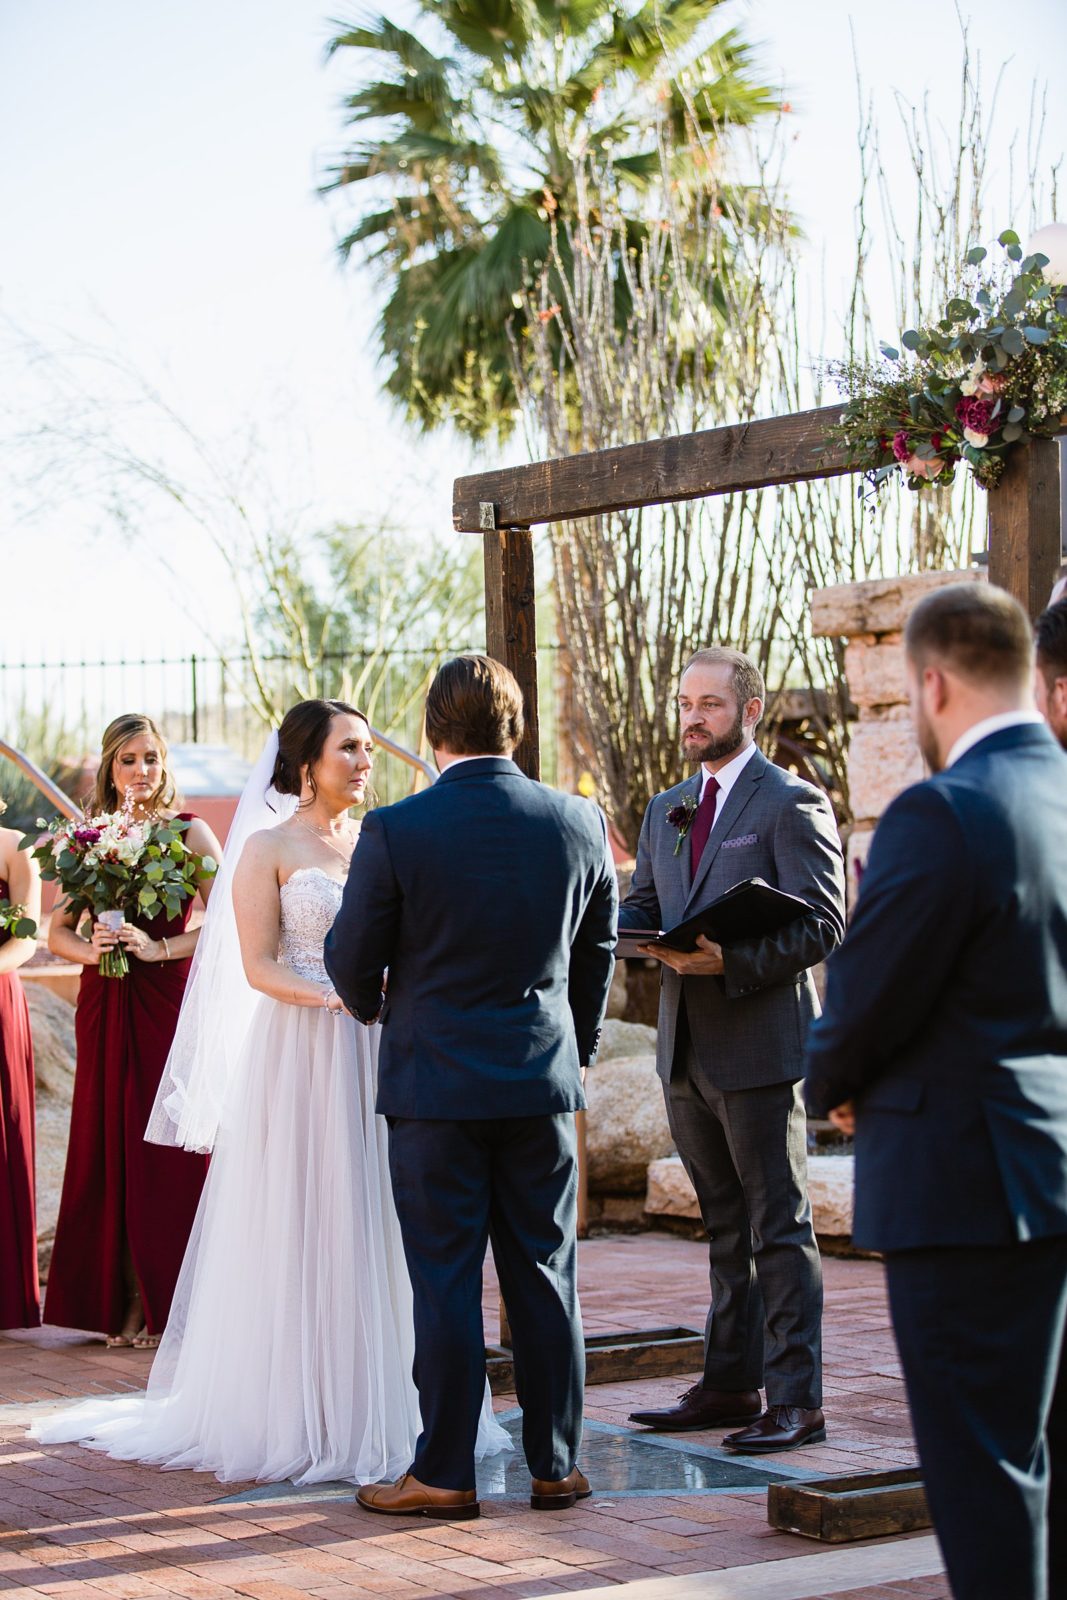 Wedding ceremony at Arizona Heritage Center at Papago Park by Arizona wedding photographer PMA Photography.